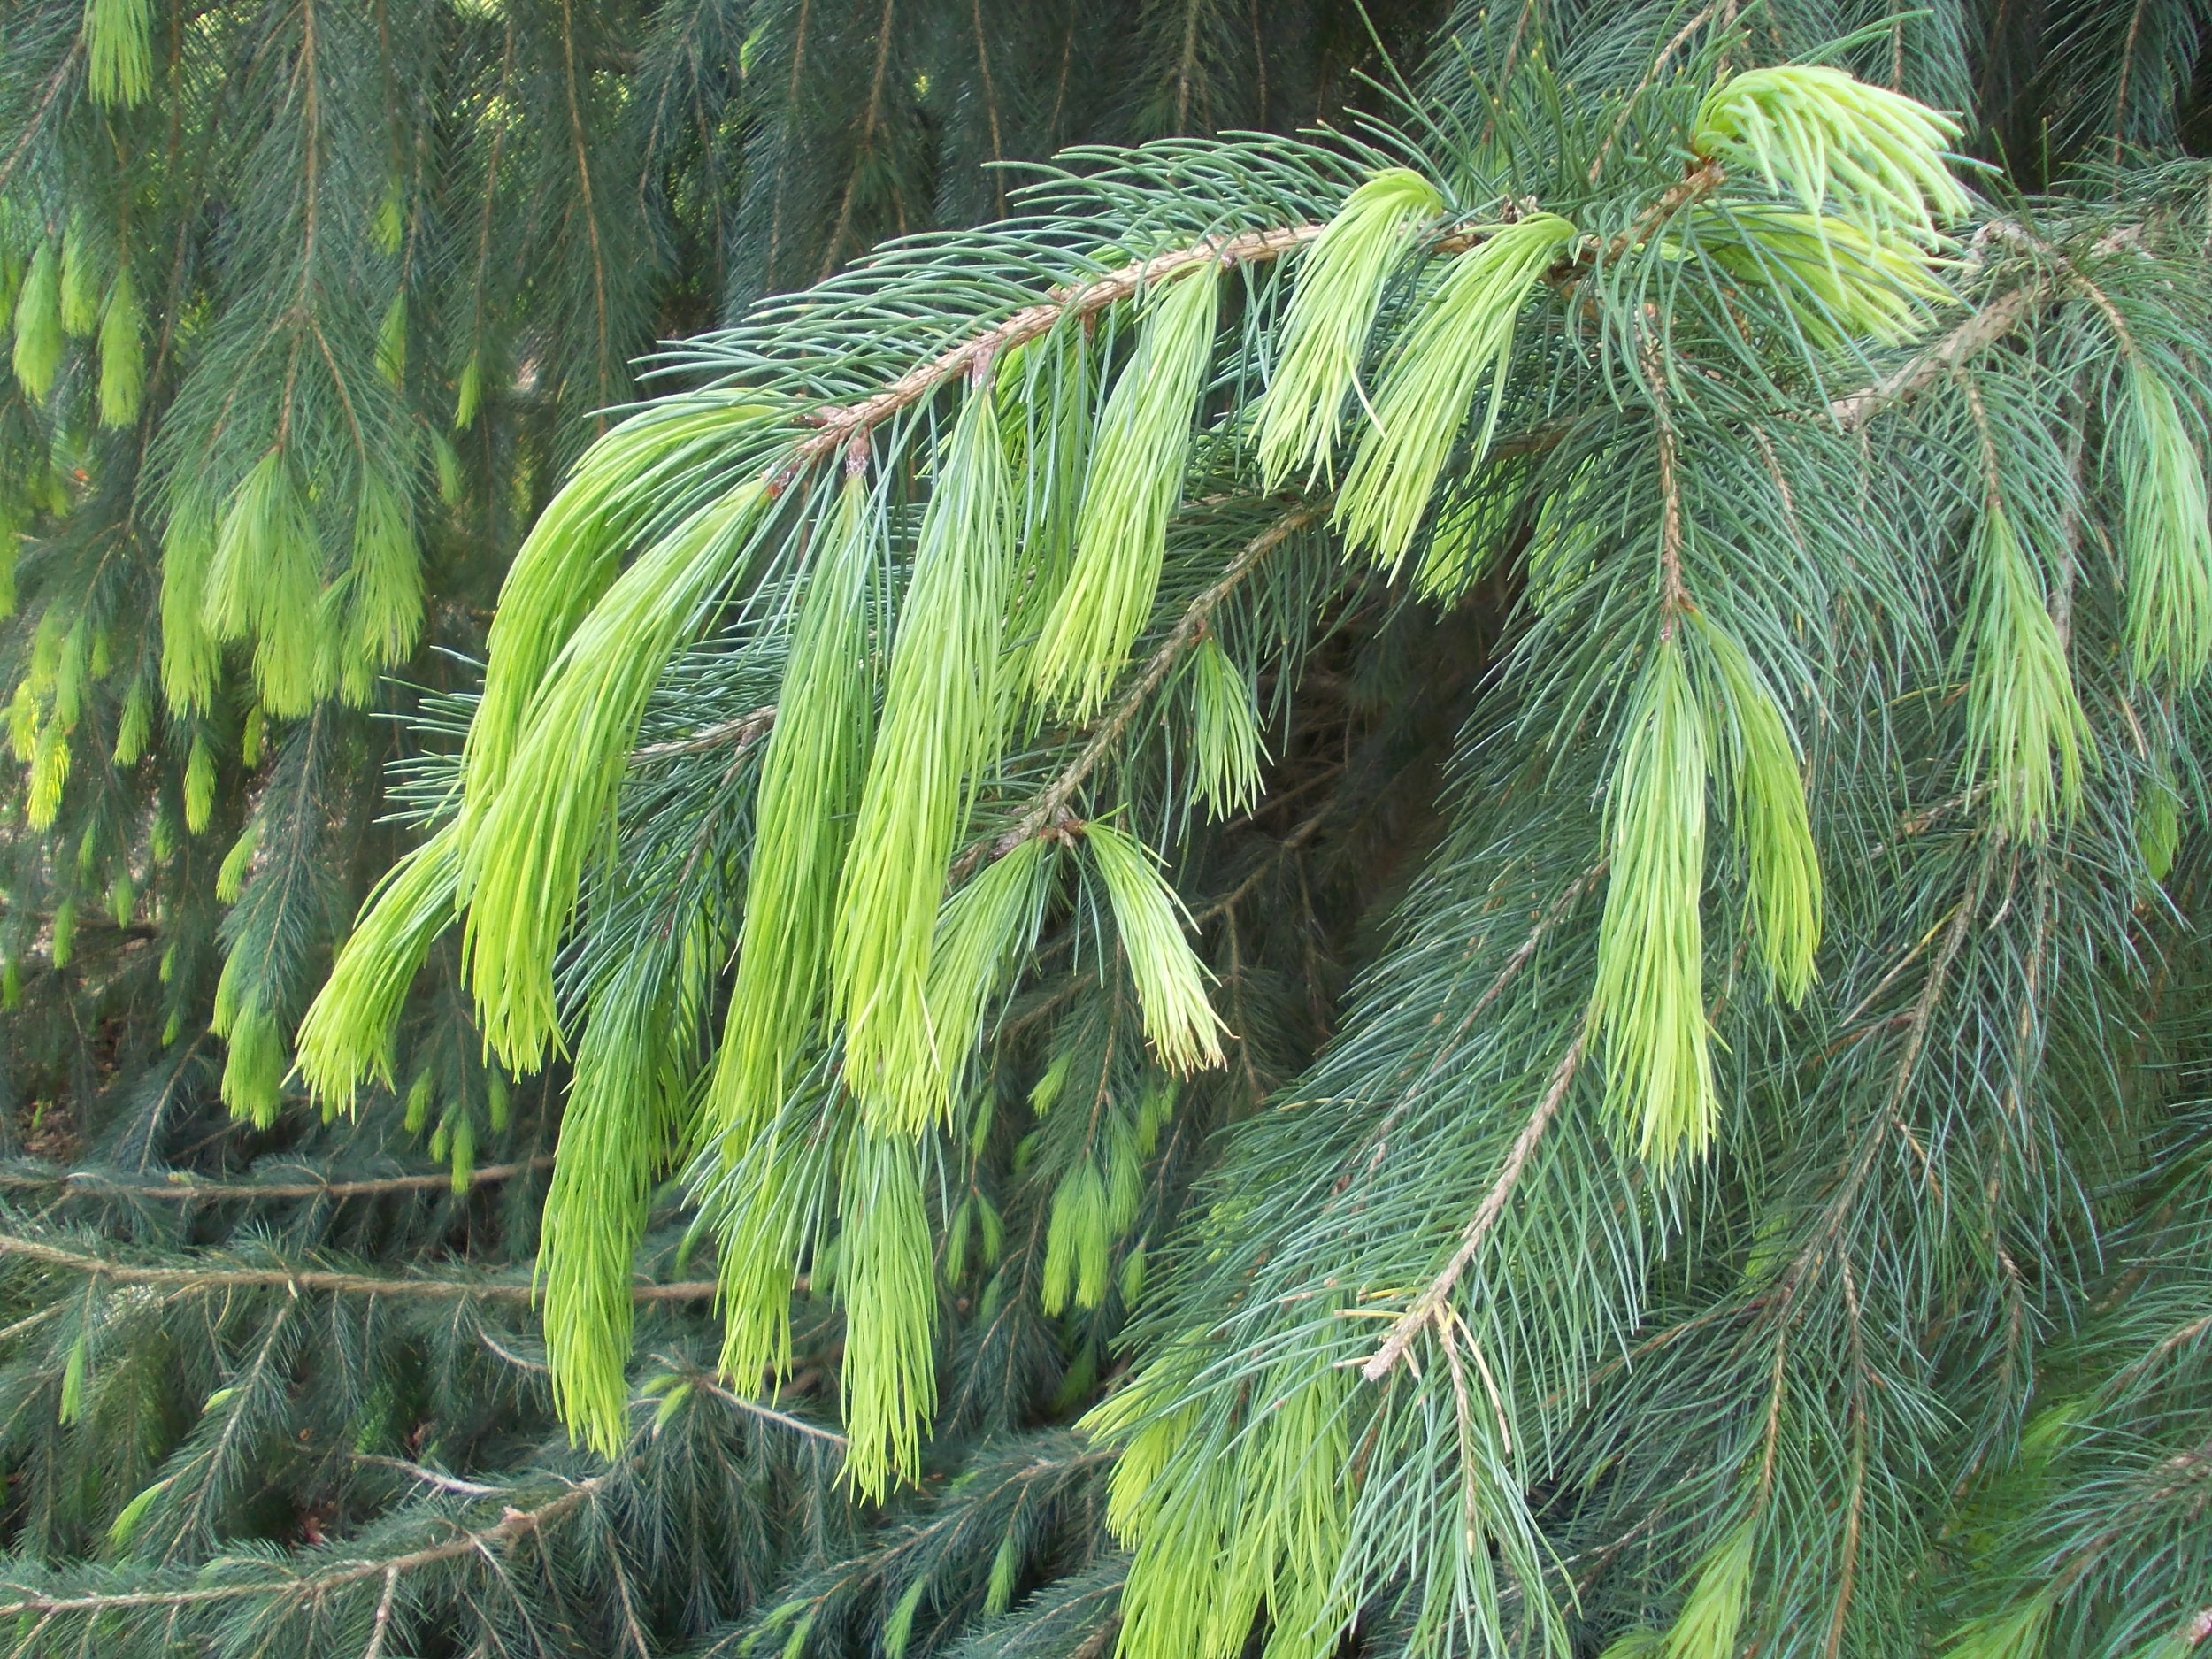 New_growth_of_Himalayan_or_Morinda_Spruce_Picea_smithiana.jpg